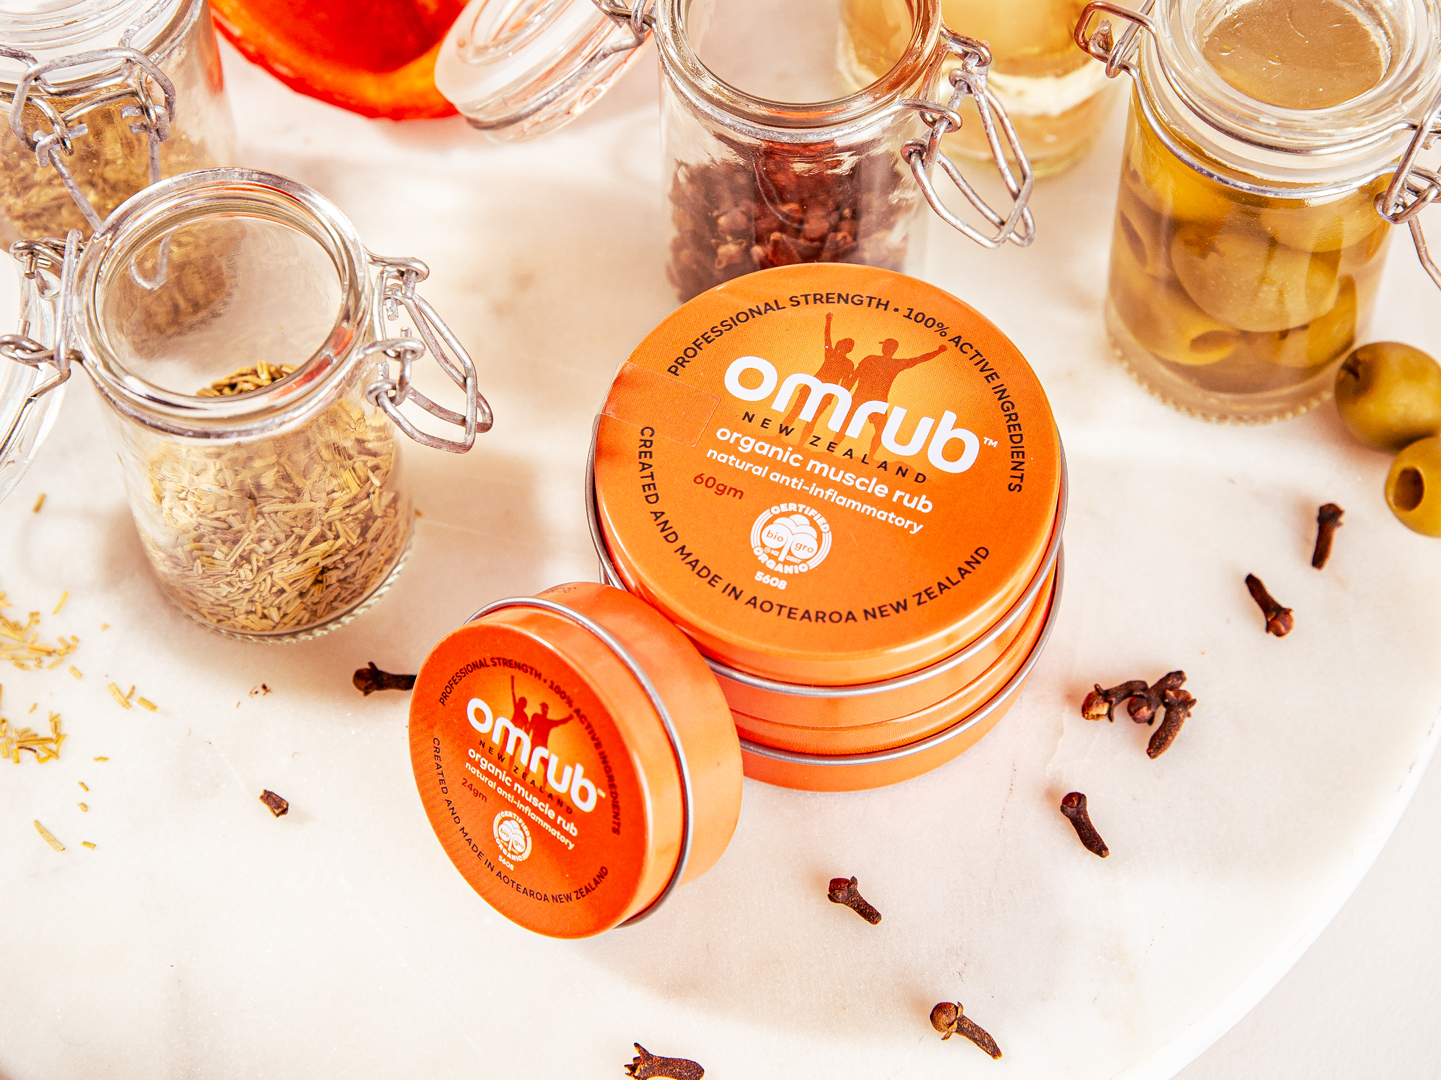 Omrub has active, organic & 100% natural ingredients